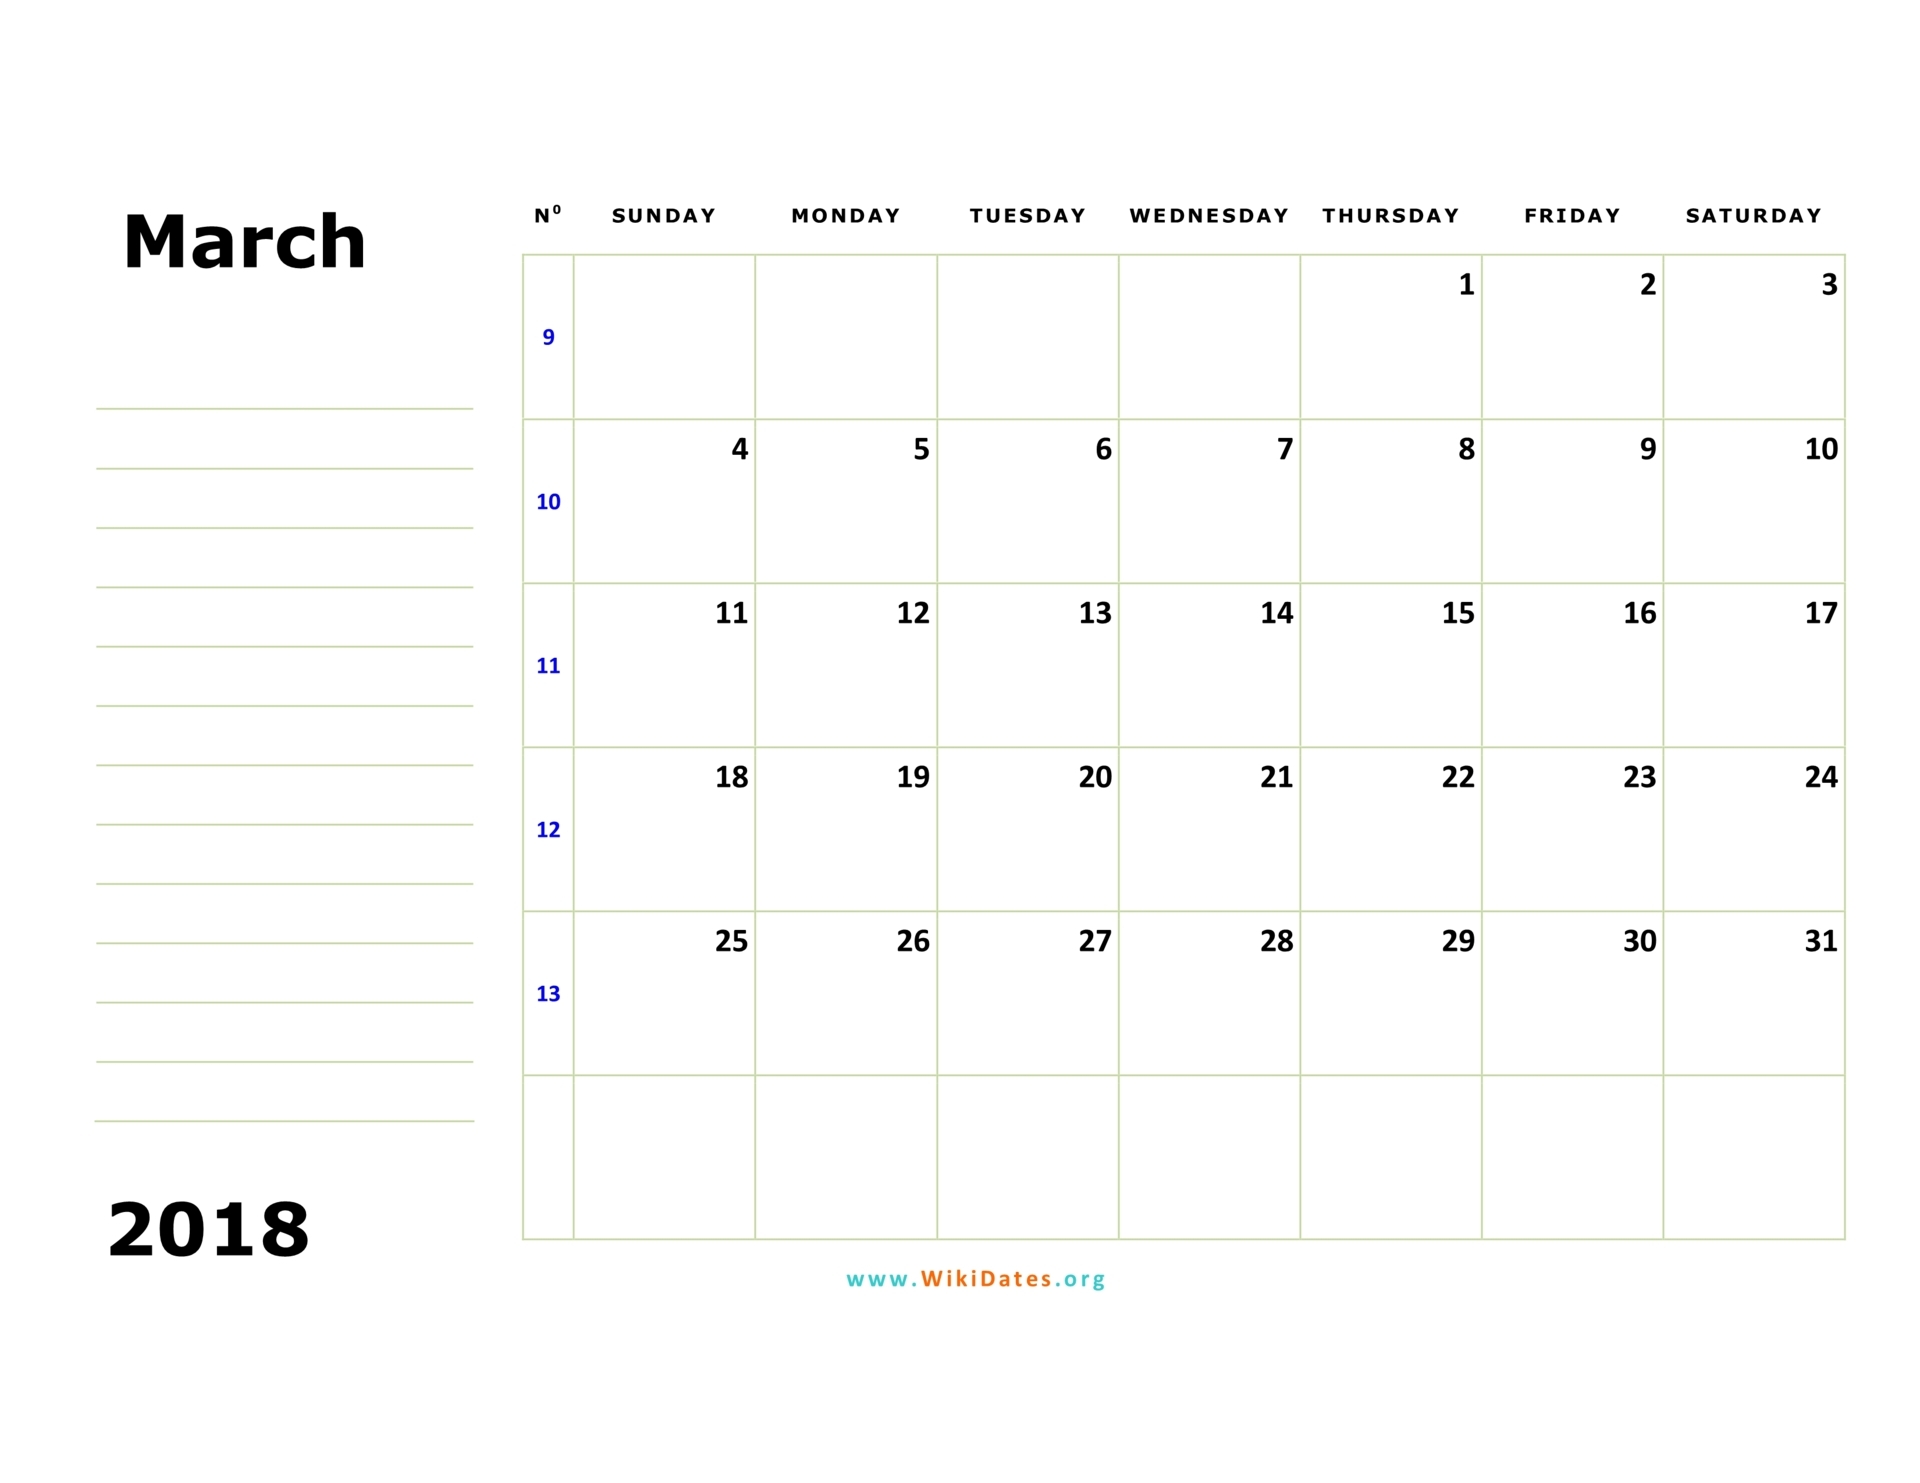 March 2018 Calendar Print Out